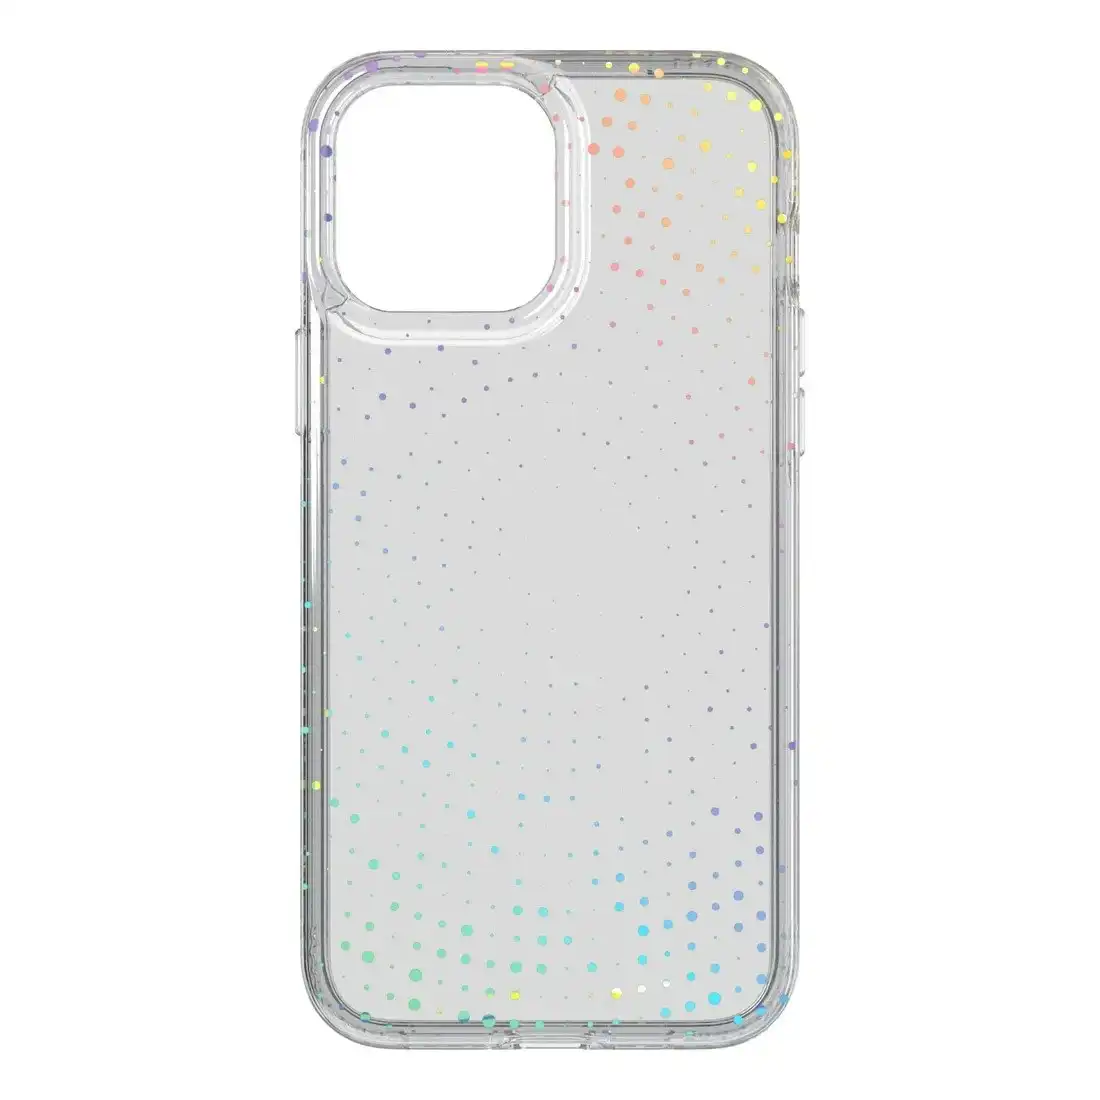 Tech21 Evo Sparkle Case for iPhone 13 Pro Max T21-8998 - Iridescent